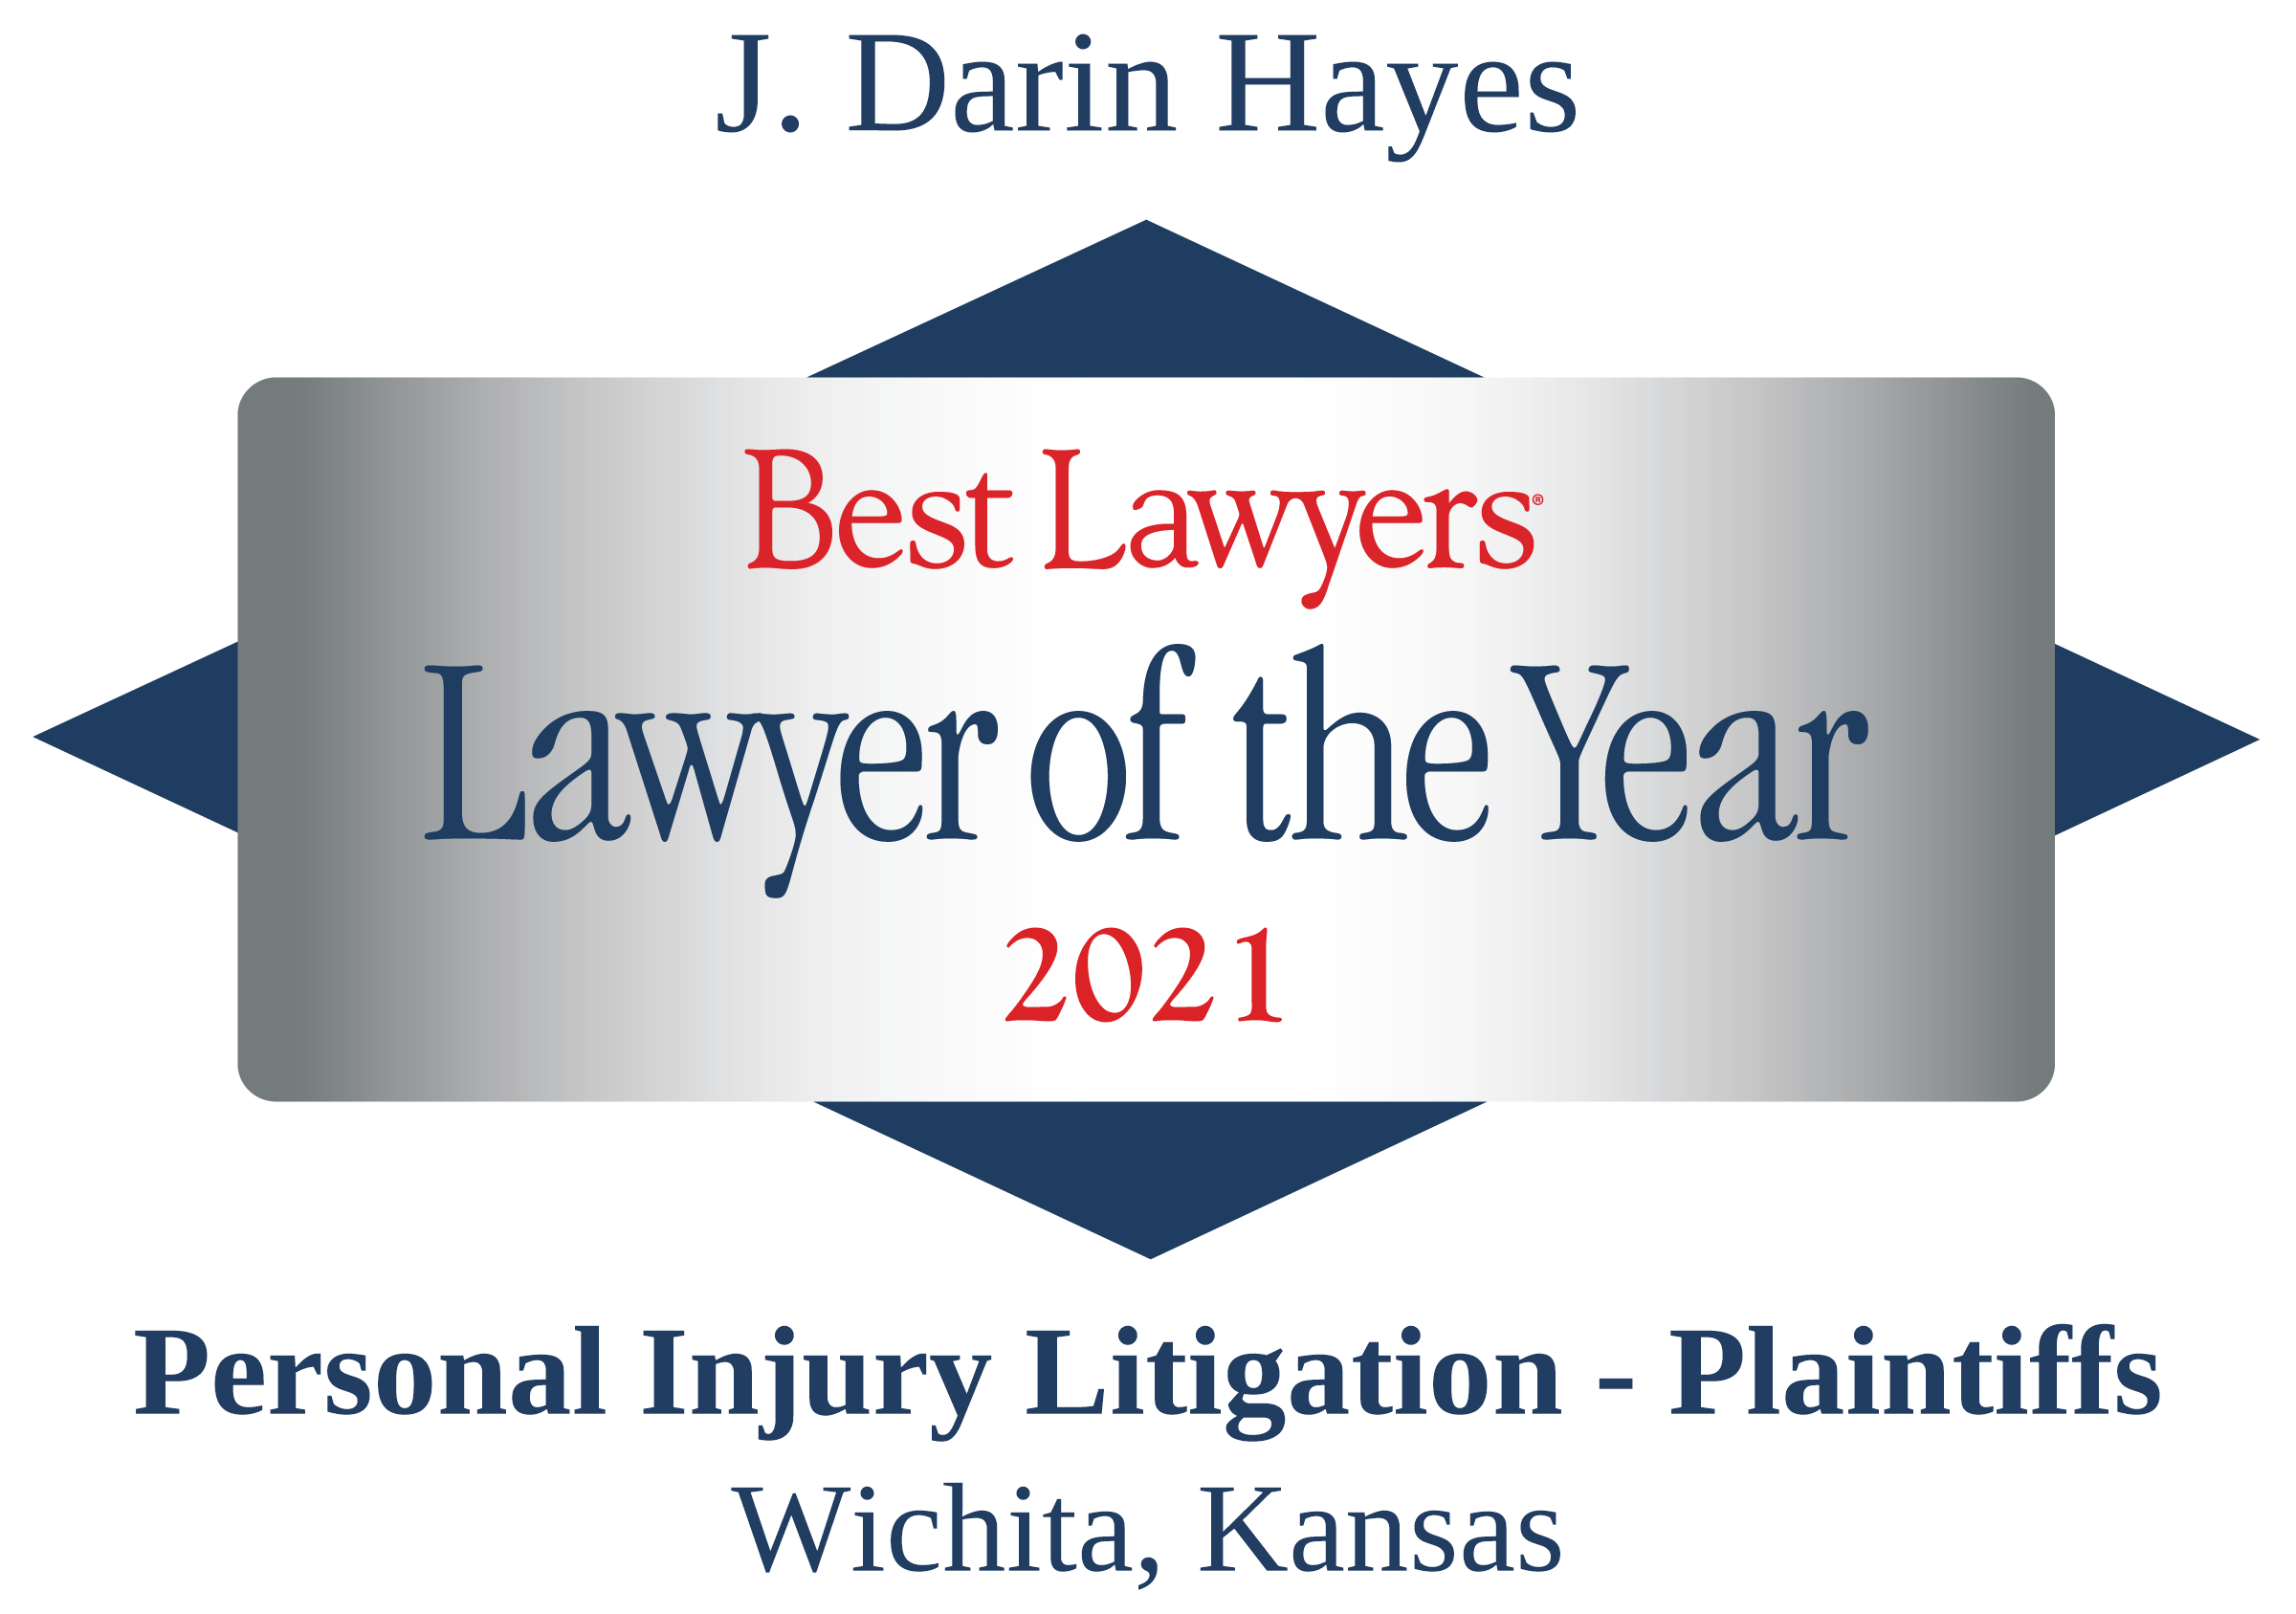 Darin best lawyers badge